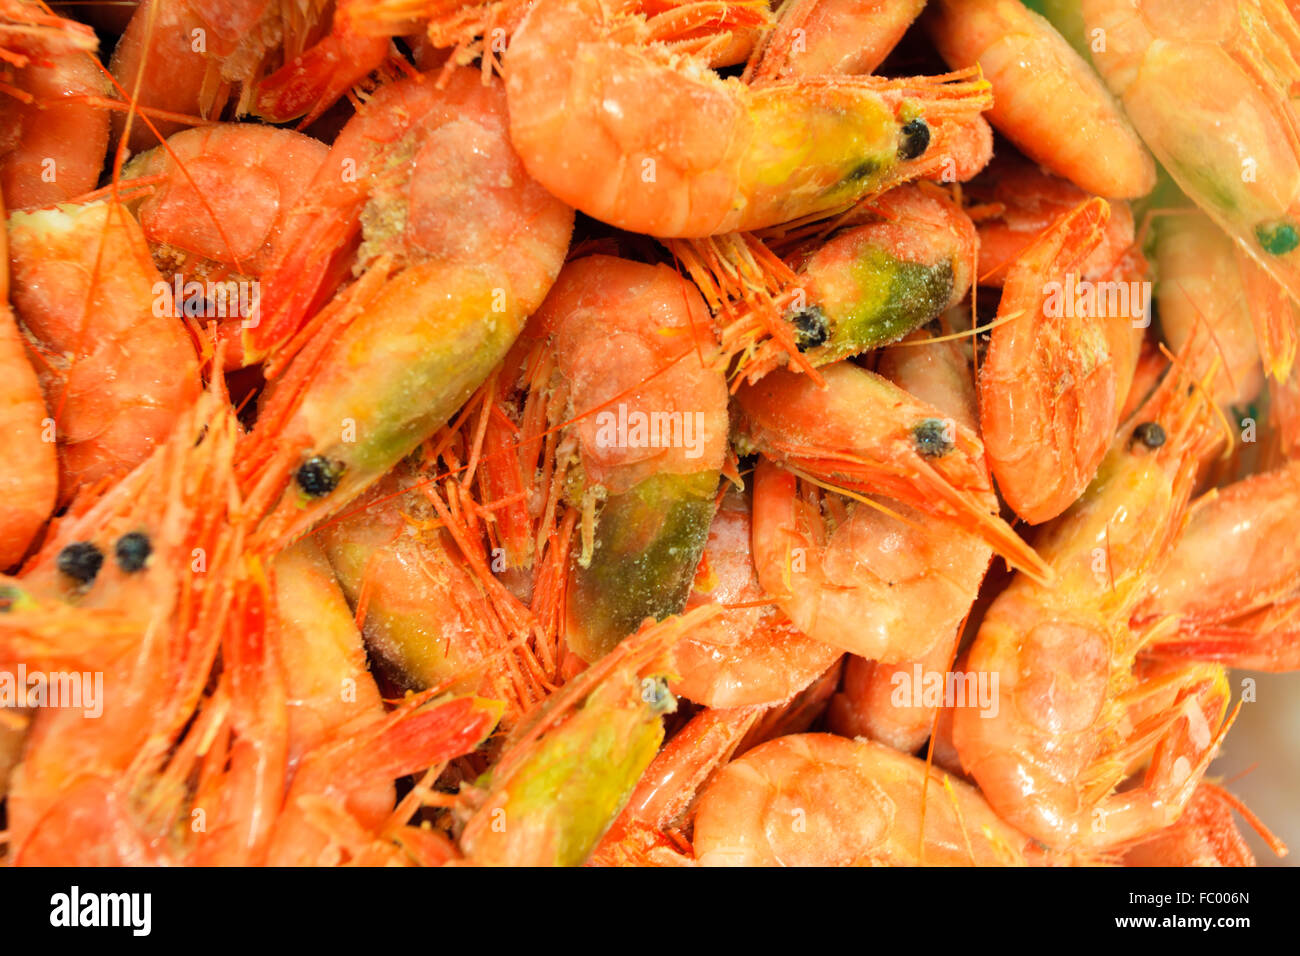 Shrimps scandinavia hi-res stock photography and images - Alamy